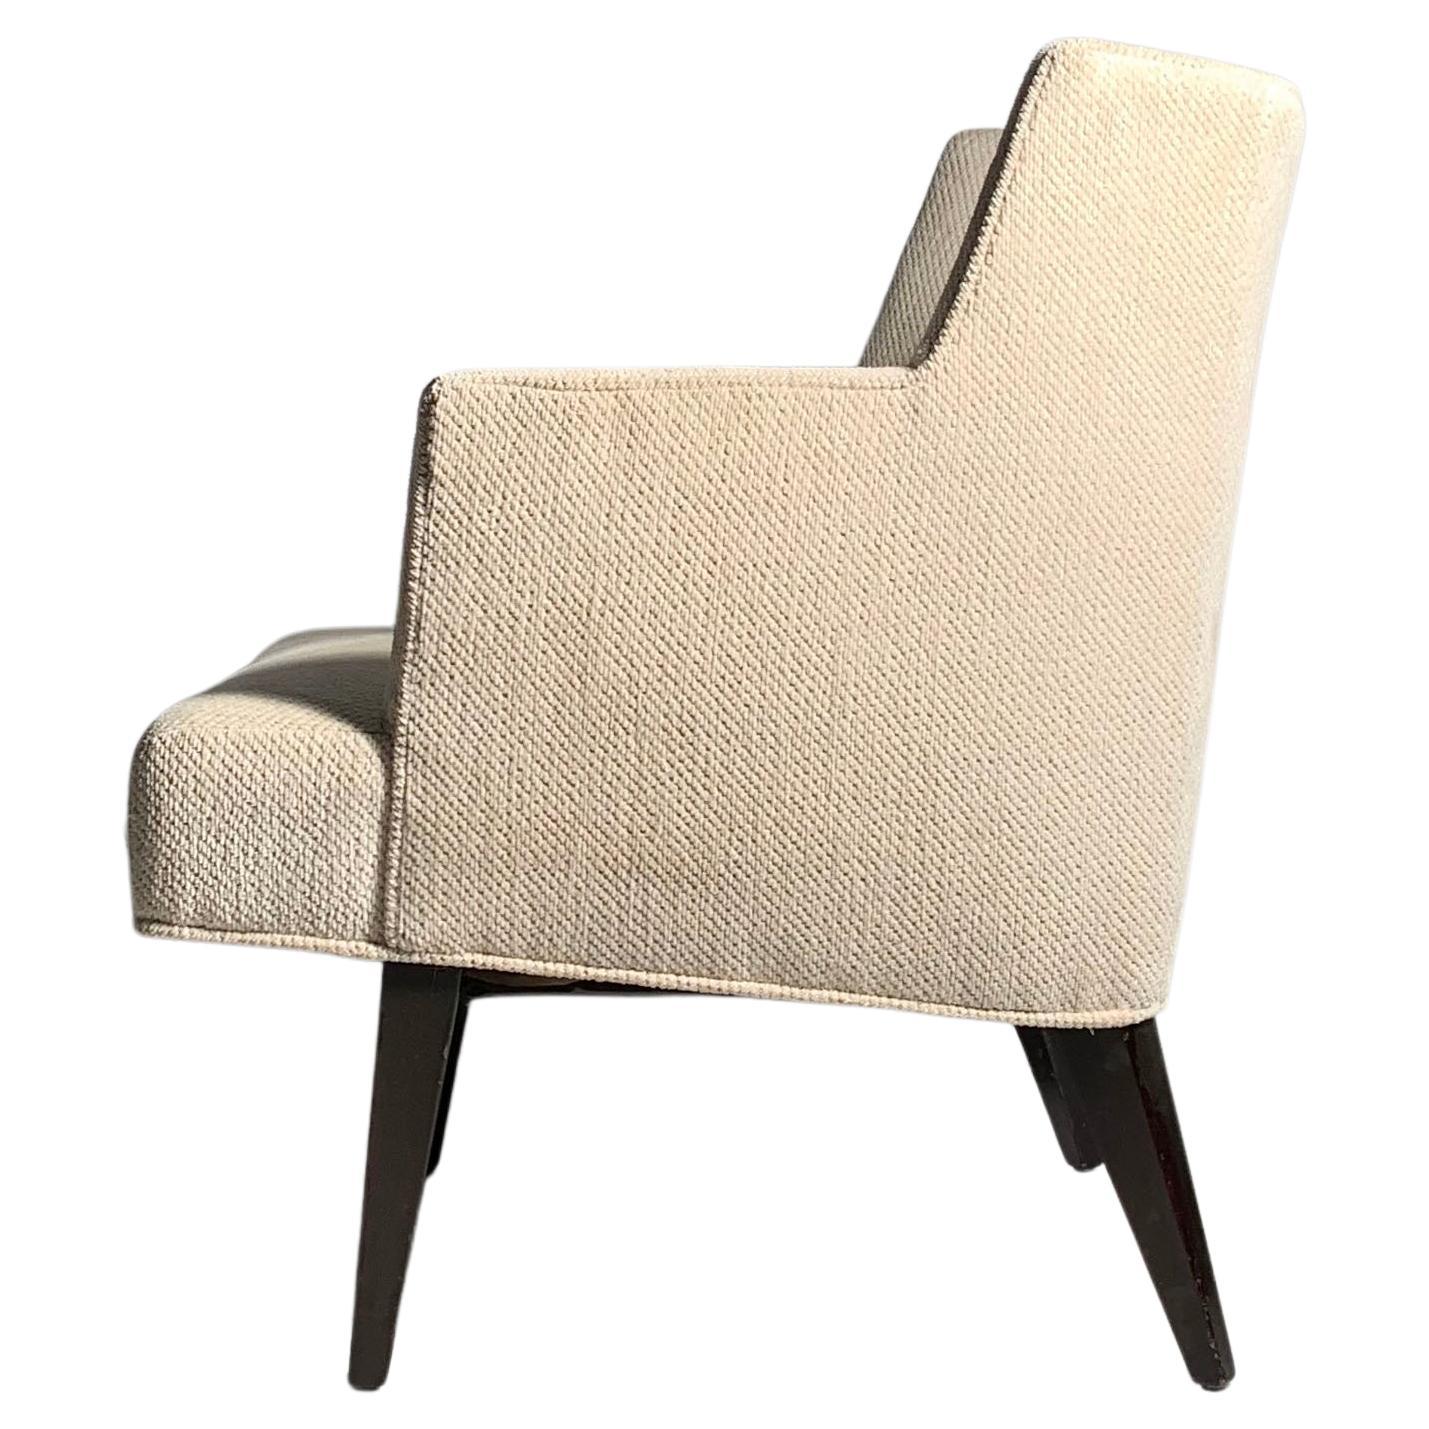 Edward Wormley Lounge Chair for Dunbar